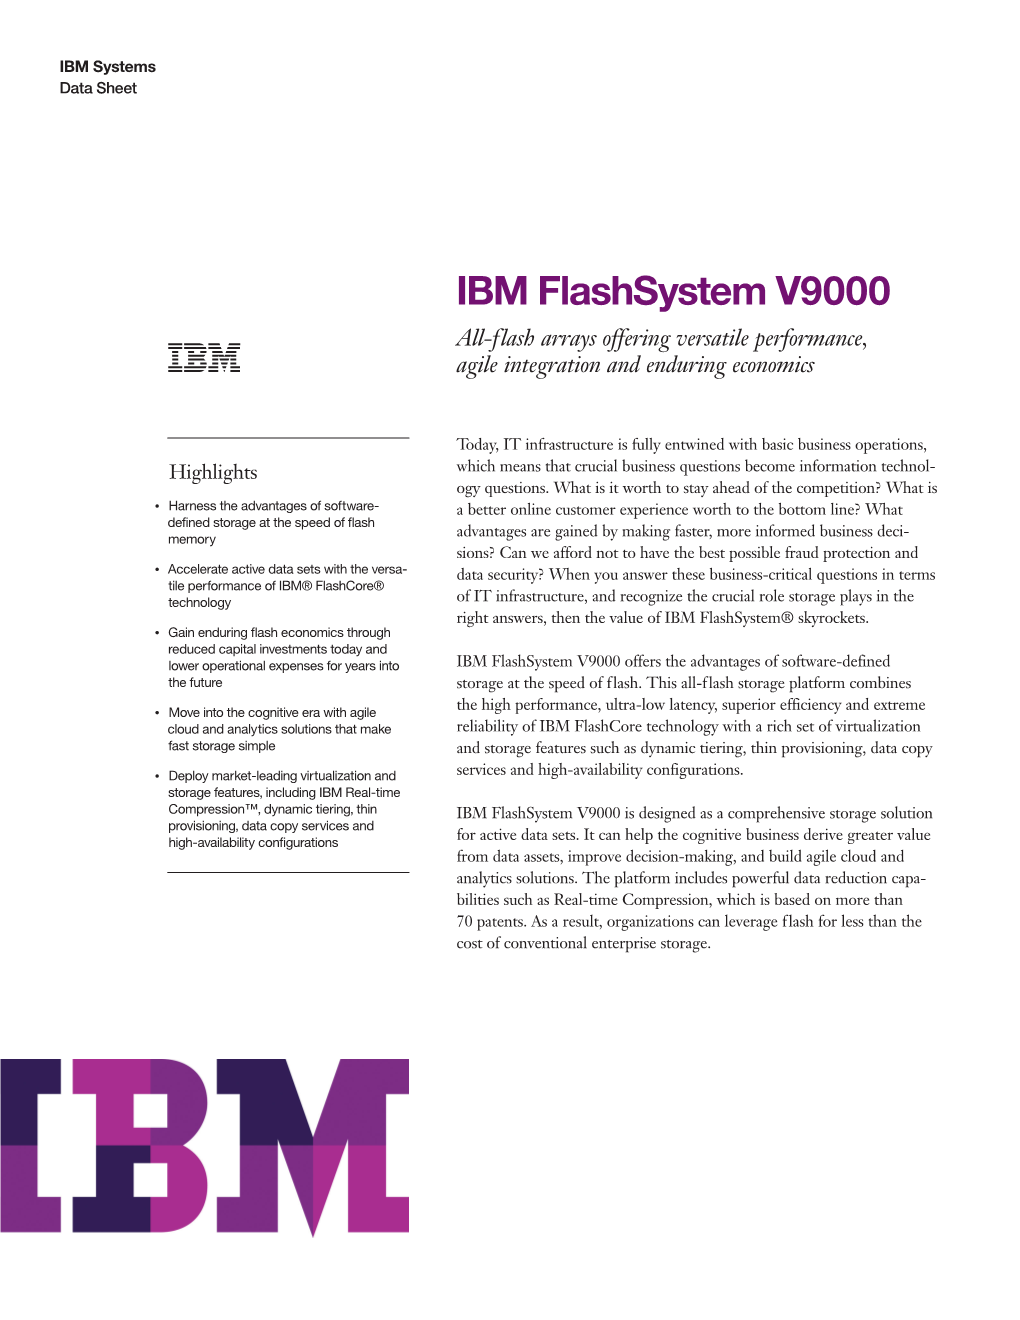 IBM Flashsystem V9000 All-Flash­ Arrays Offering Versatile Performance, Agile Integration and Enduring Economics